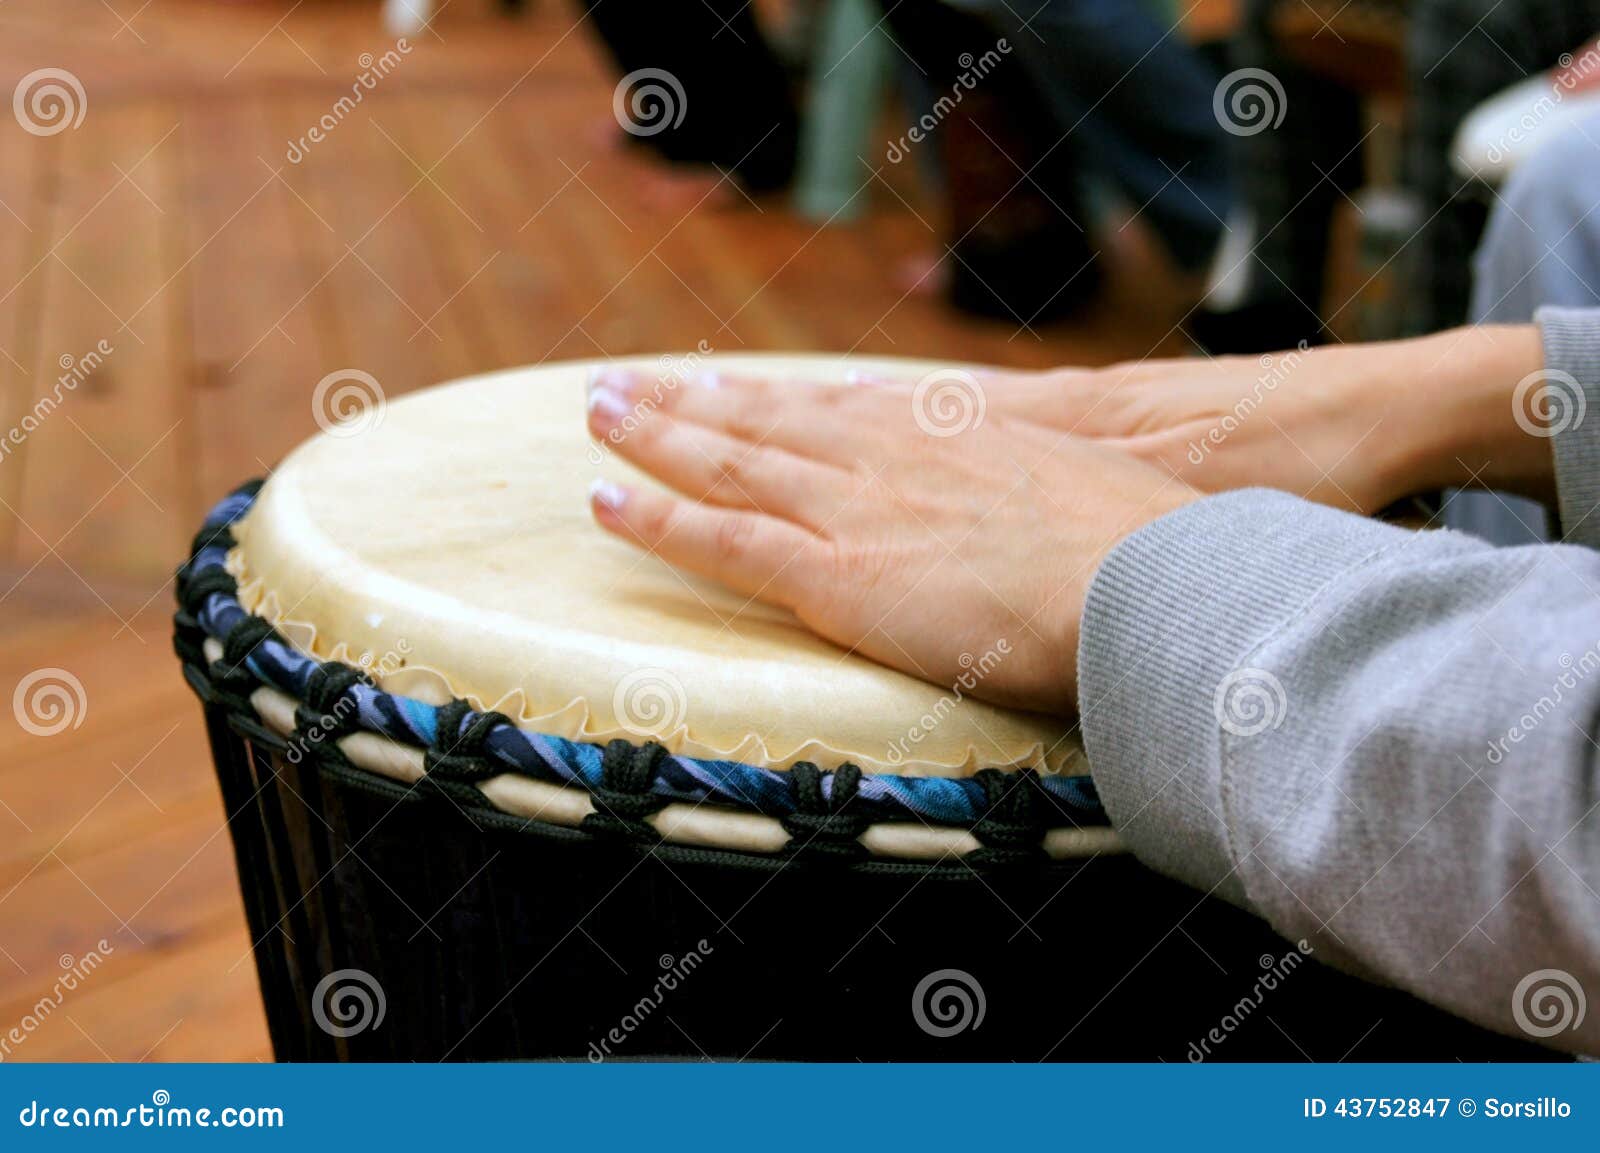 drum circle woman hands